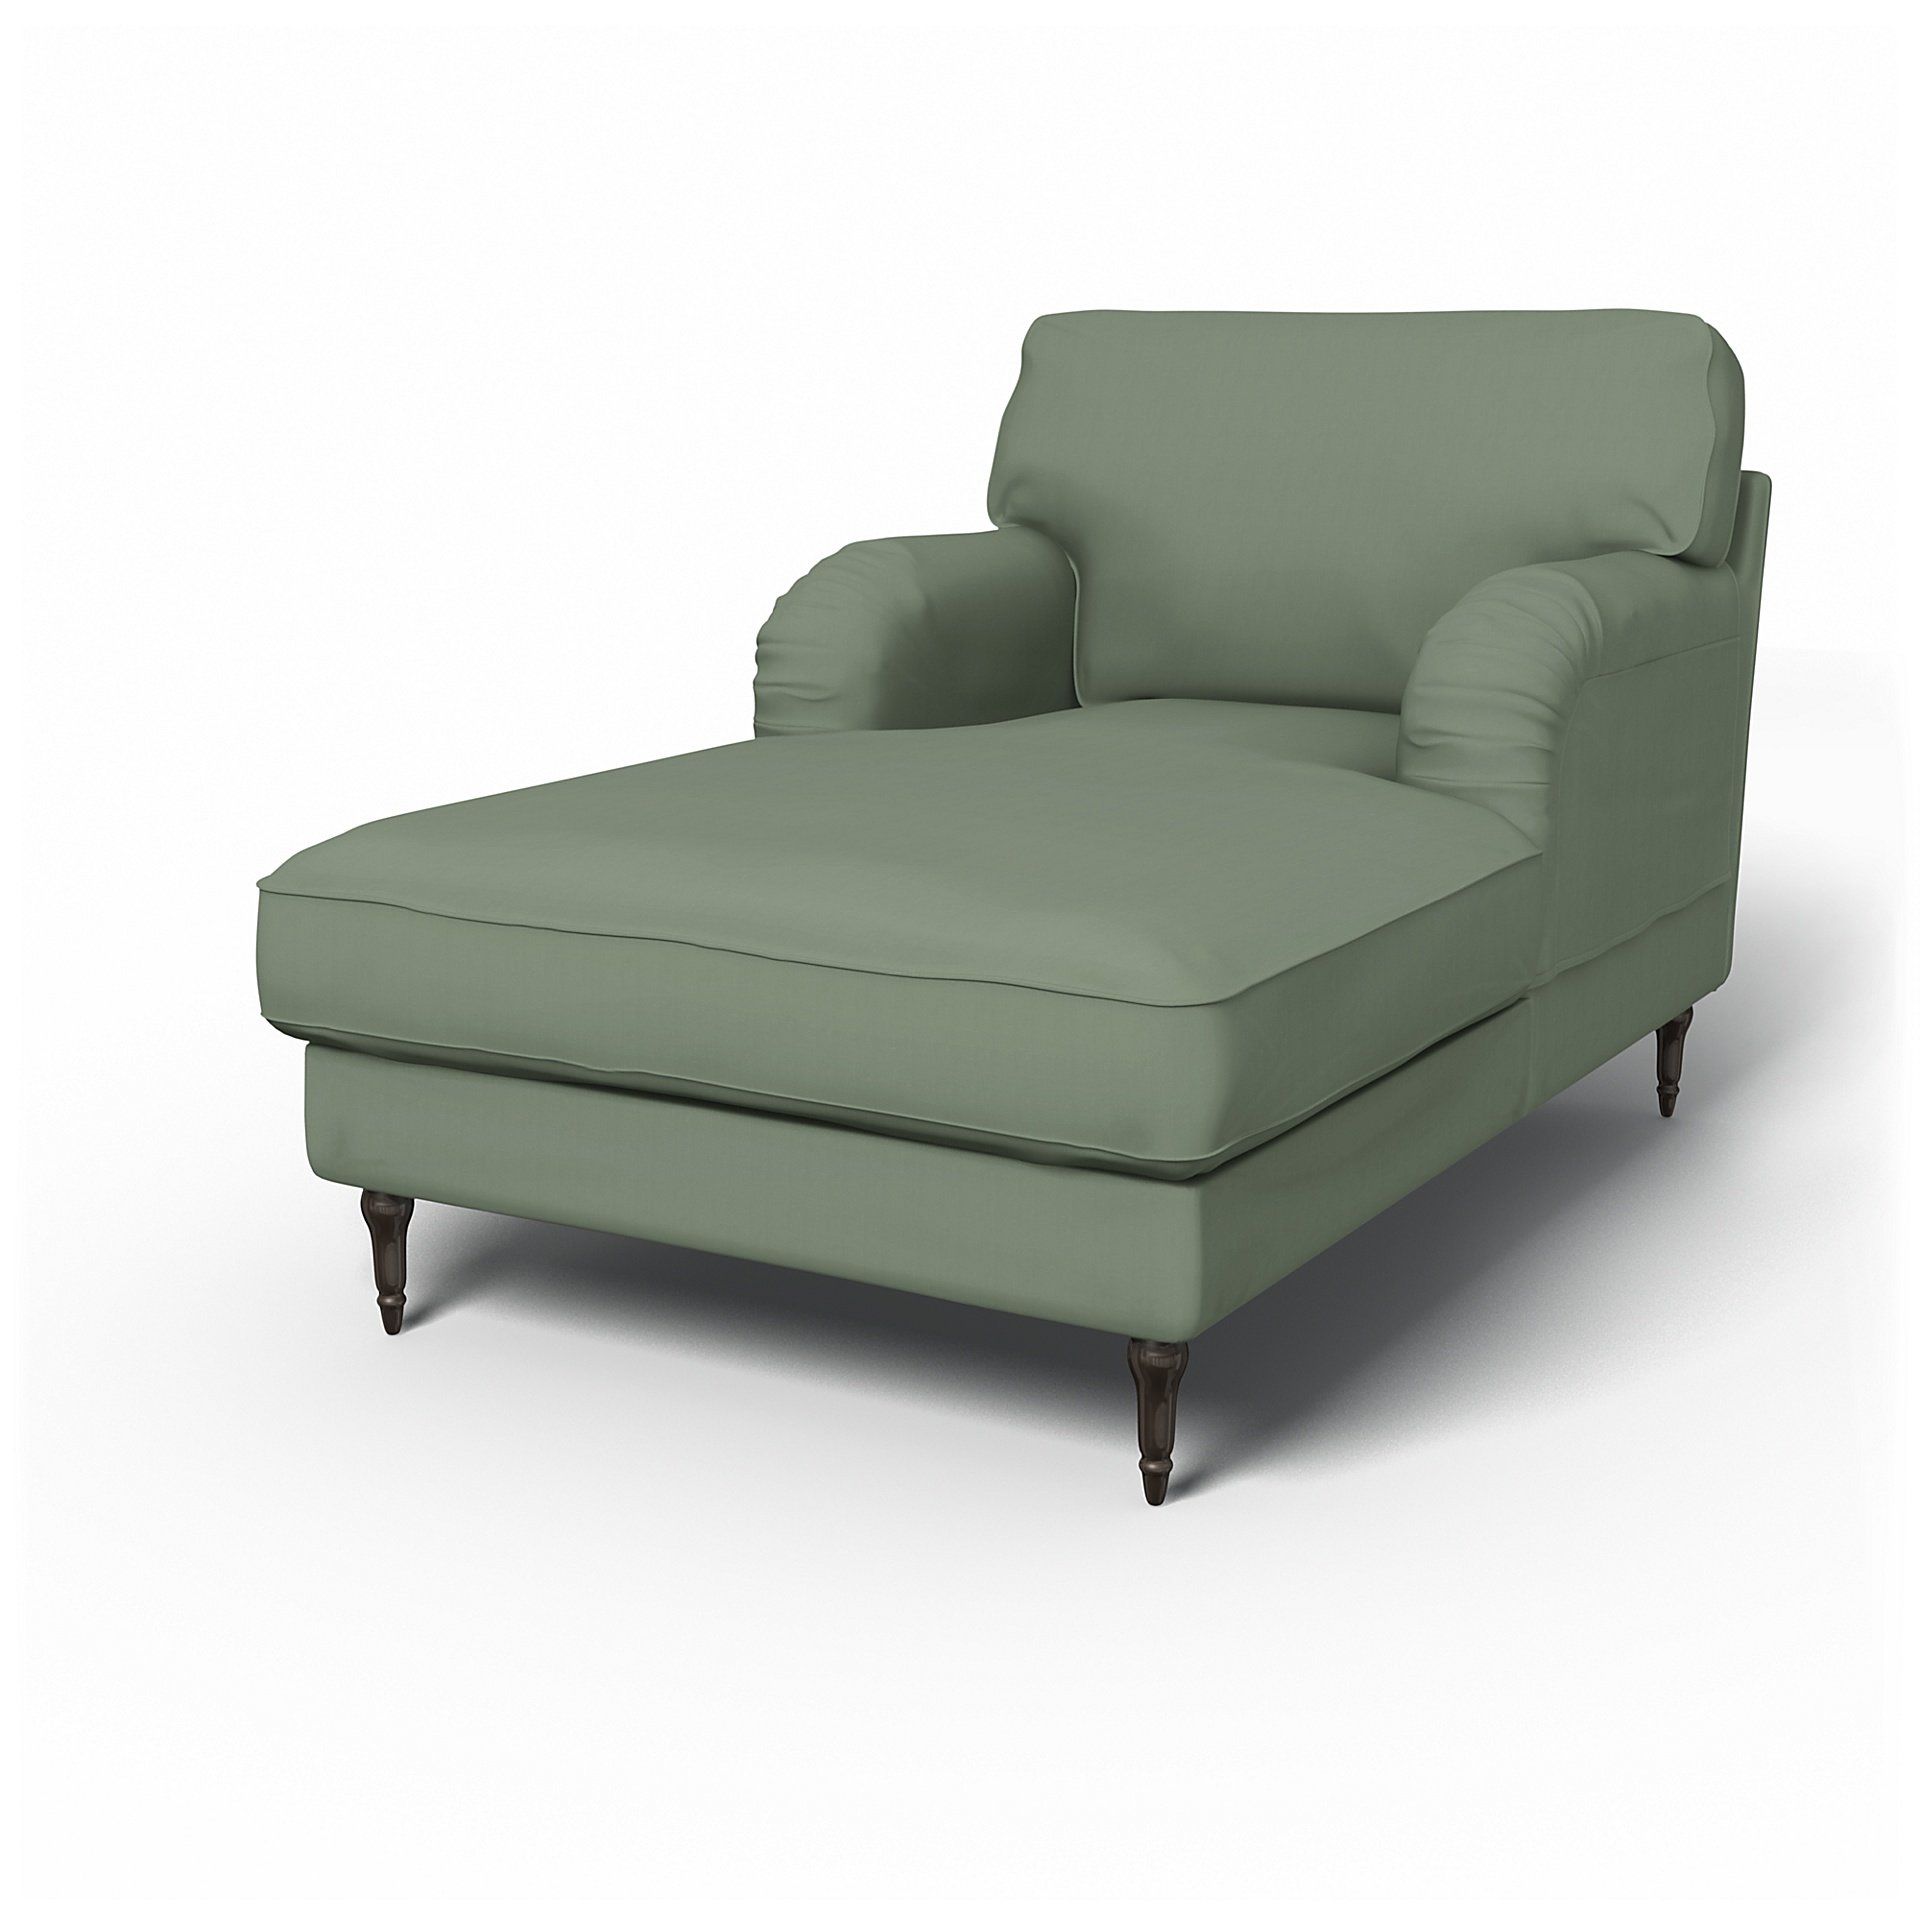 IKEA - Stocksund Chaise Longue Cover, Seagrass, Cotton - Bemz